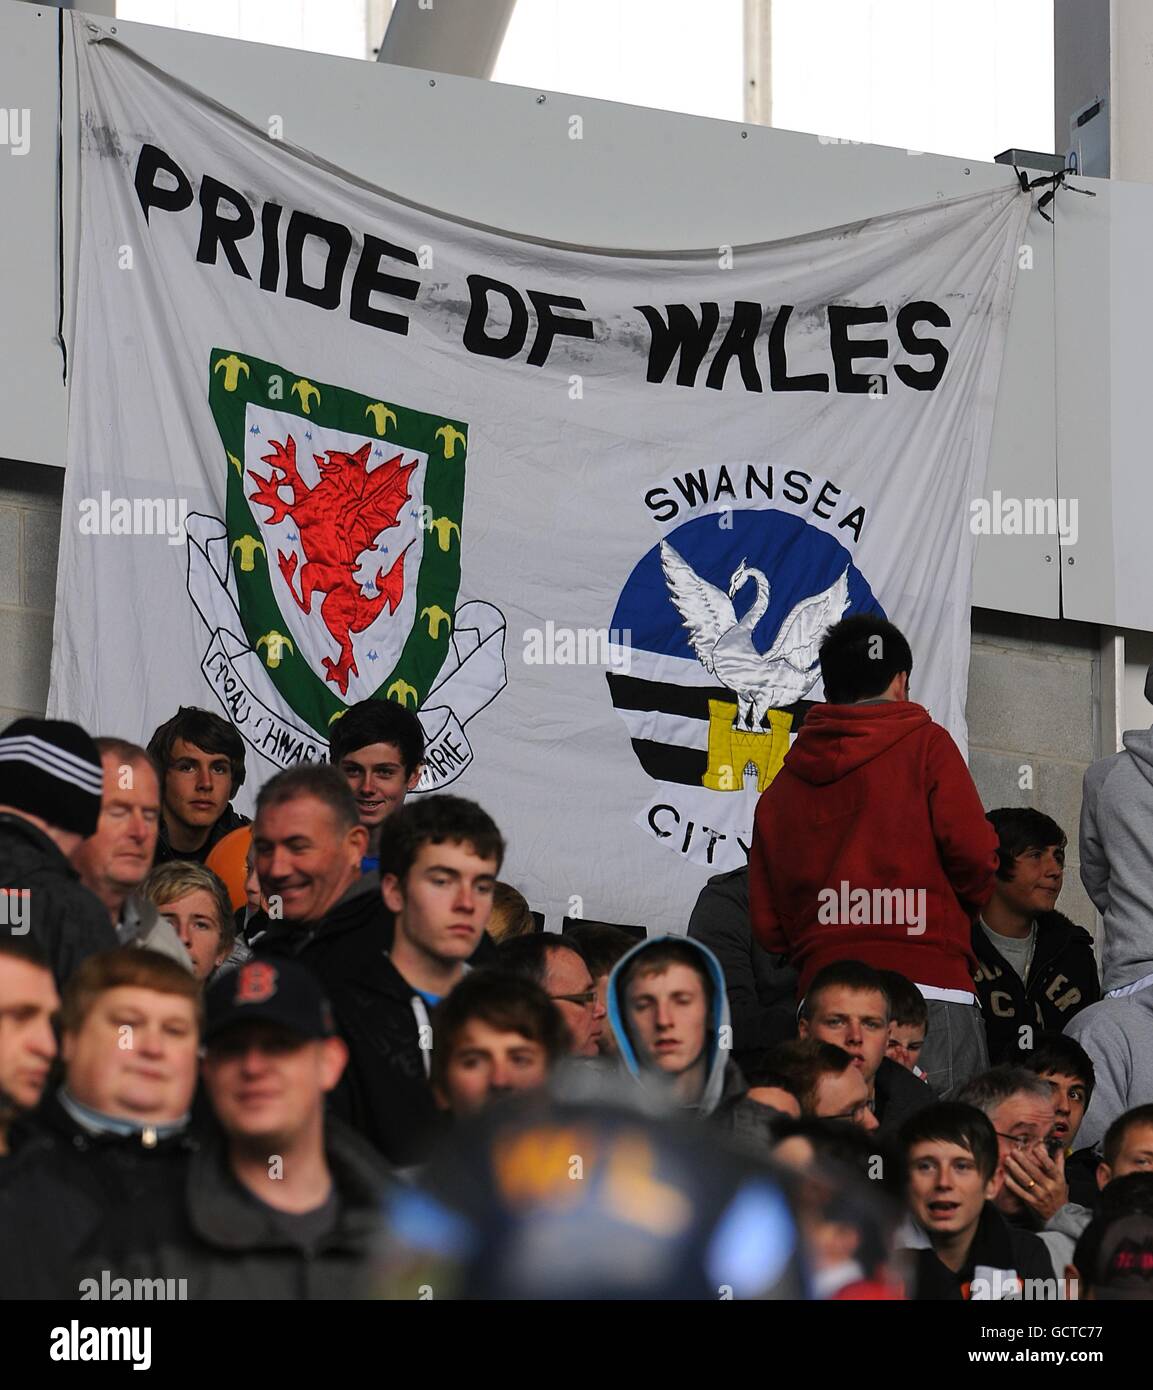 LIMBS! Swansea City v Cardiff City